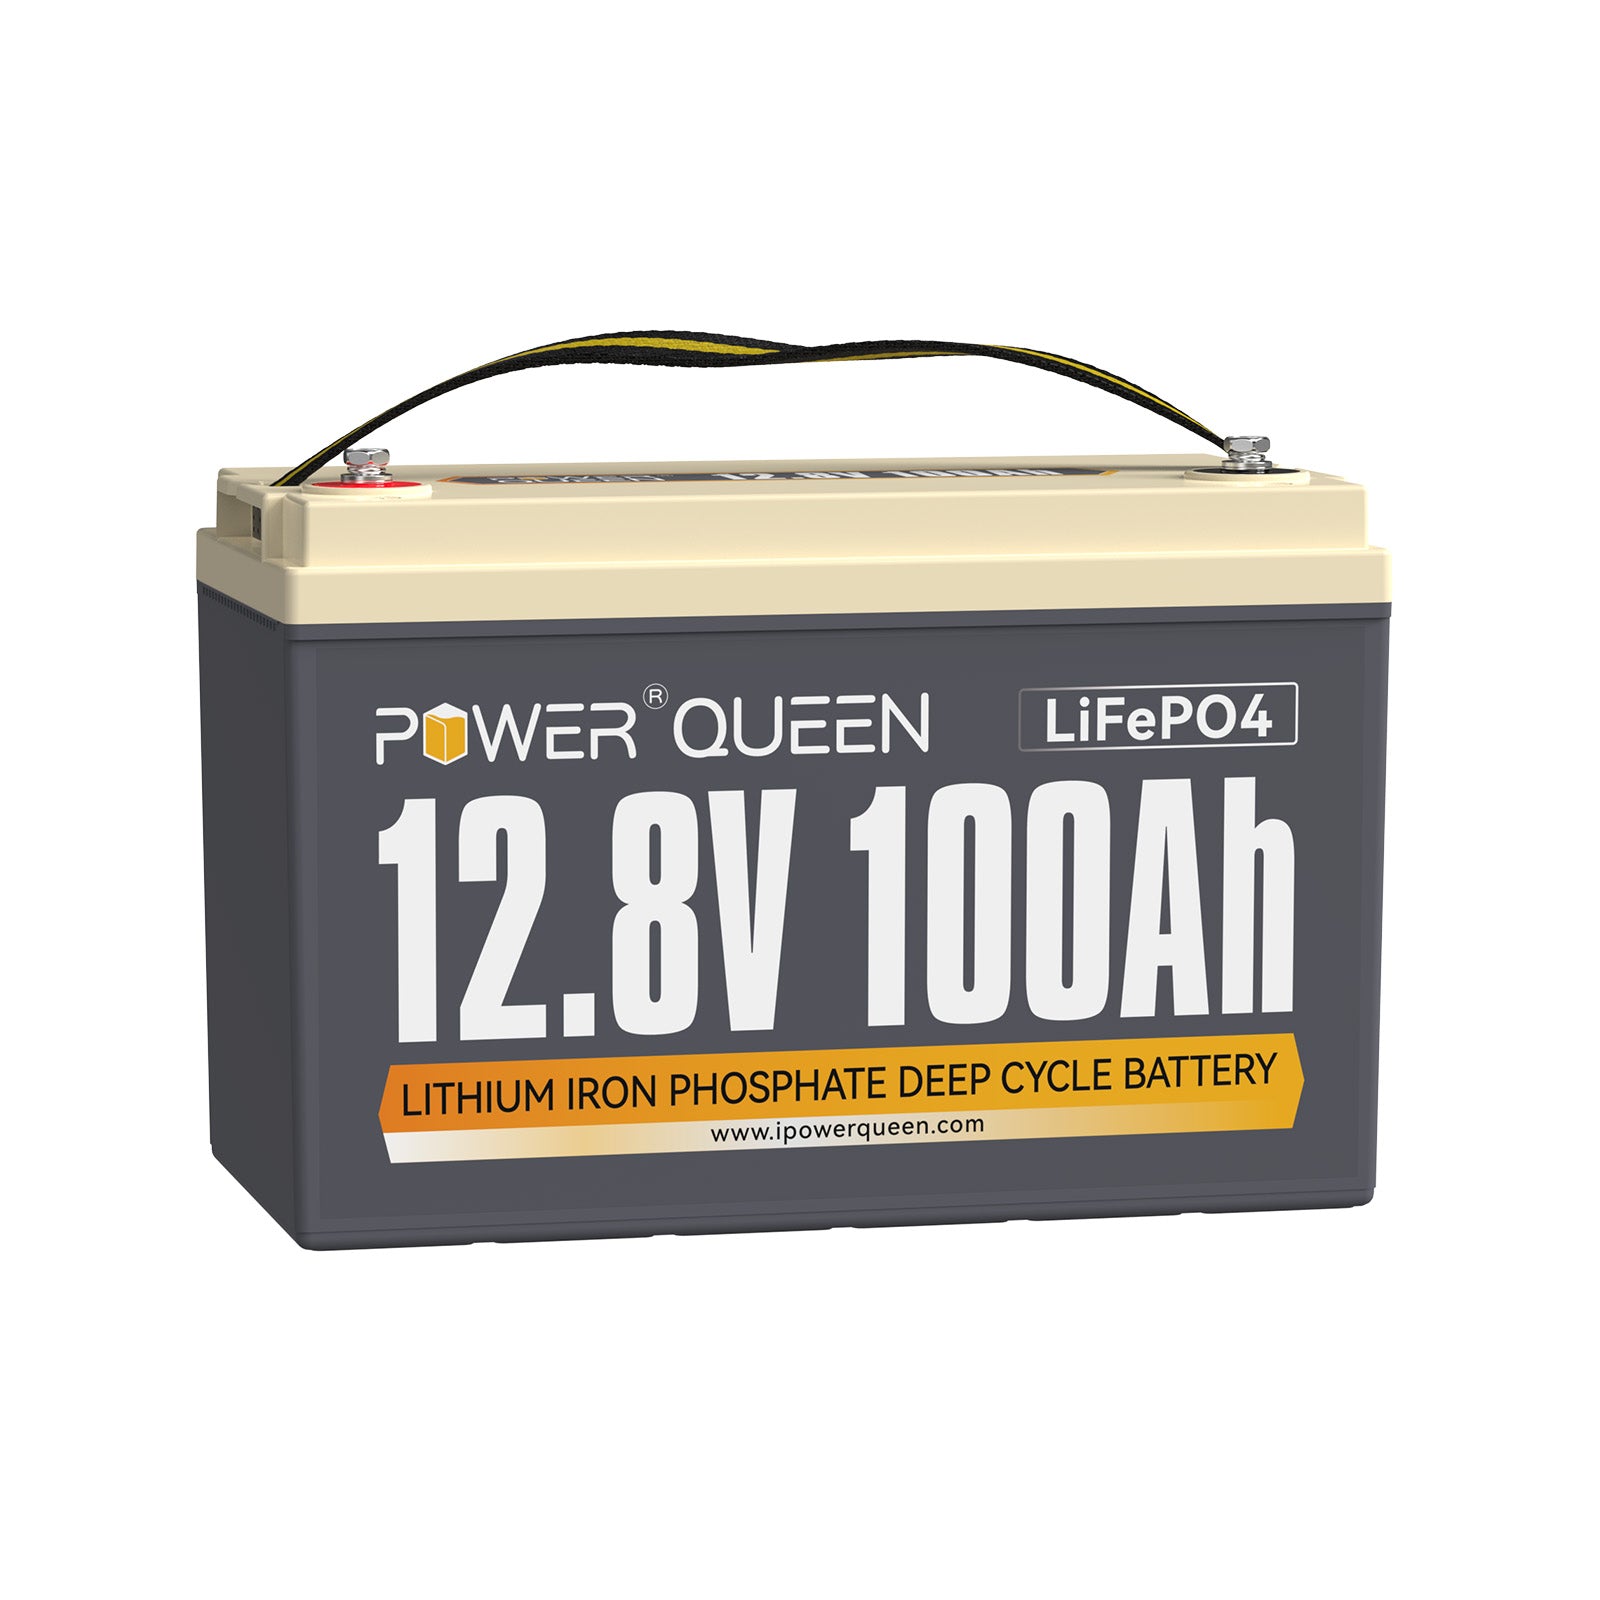 Batería Power Queen LiFePO4 de 12,8 V y 100 Ah, BMS de 100 A incorporado